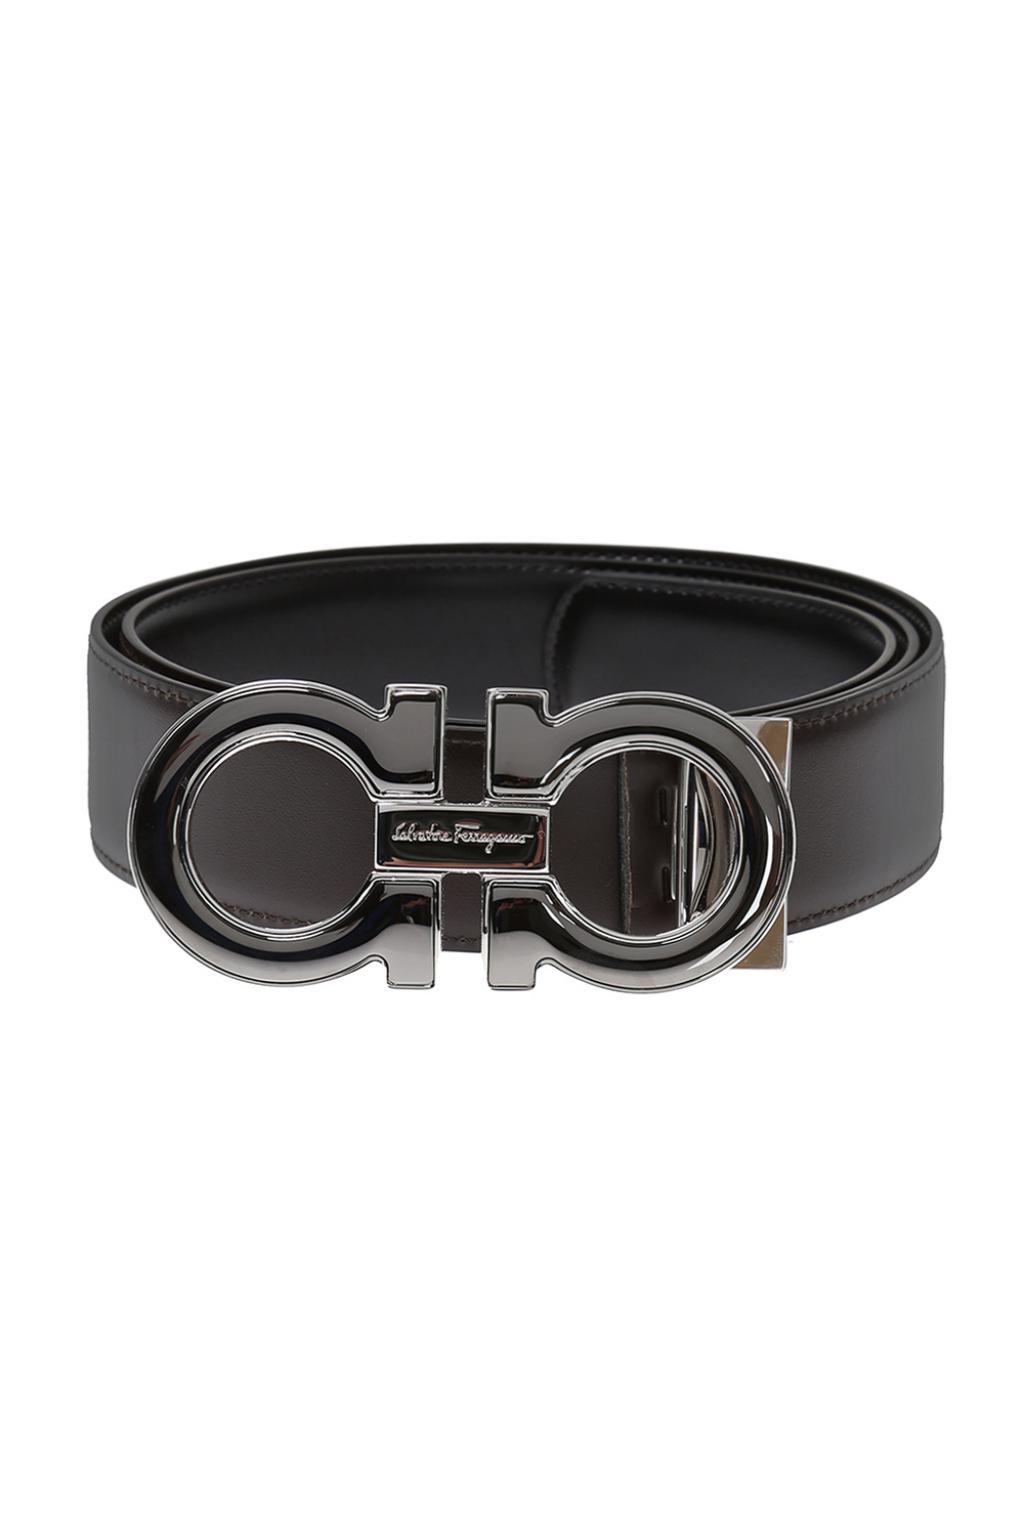 Ferragamo Reversible Leather Belt in Brown for Men - Lyst